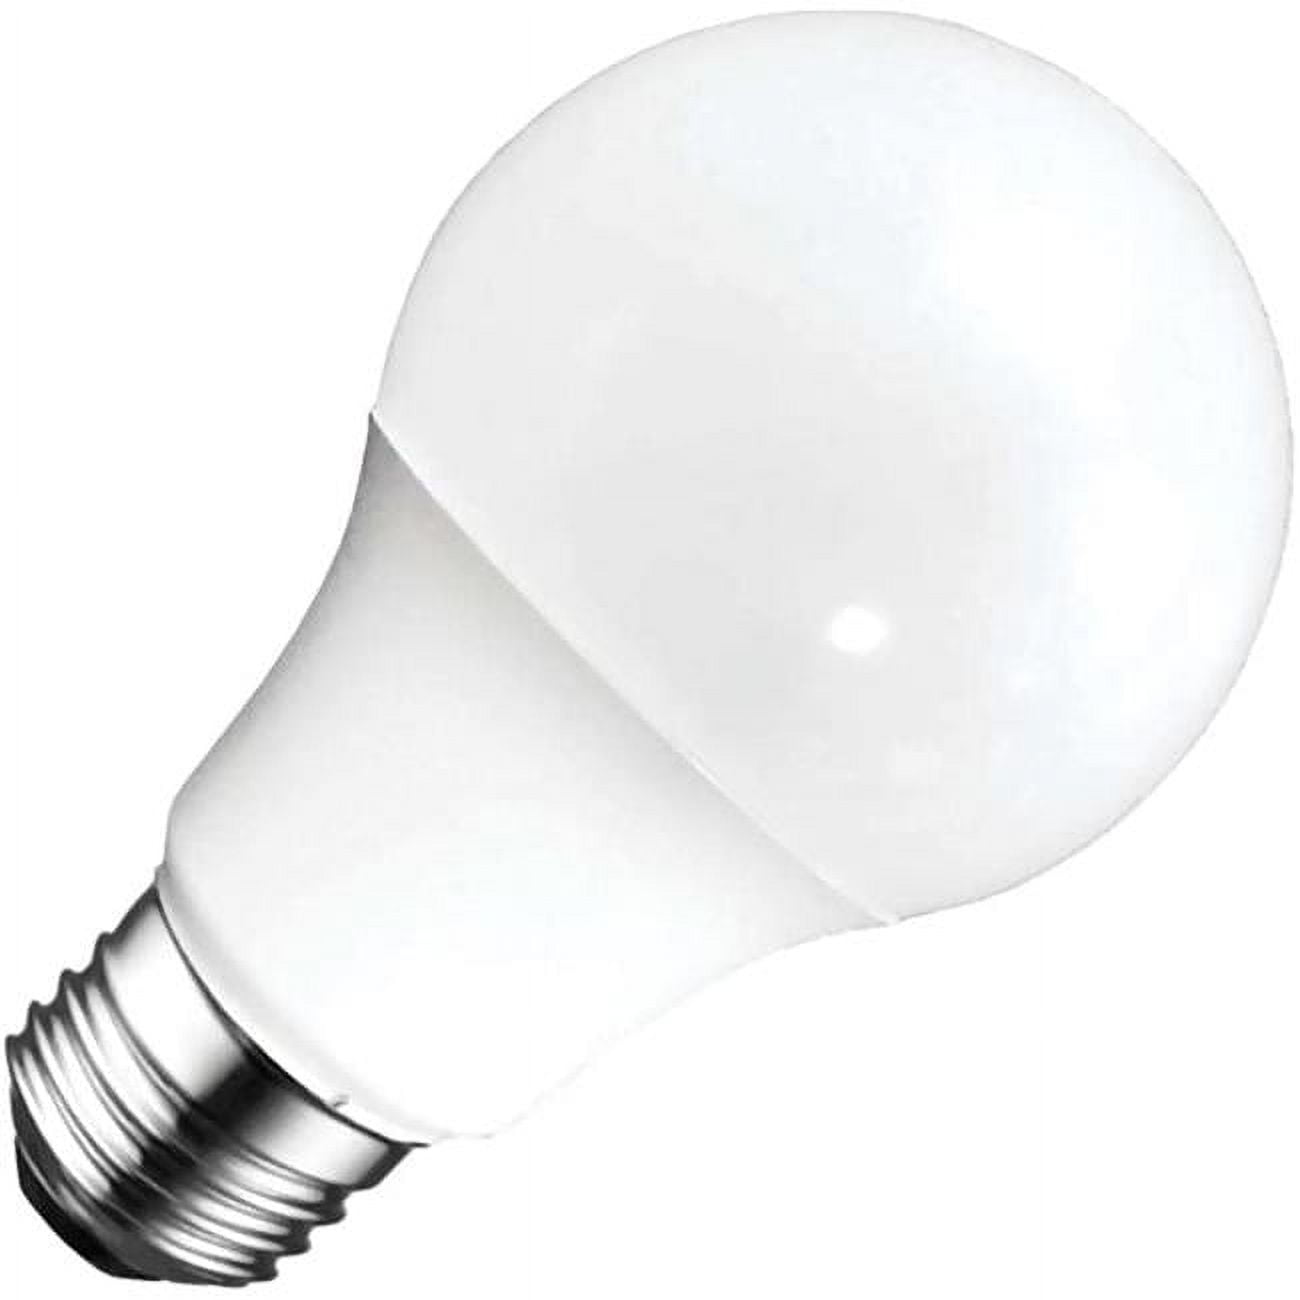 General Electric 93130318 15W LED Par38 Light Blubs, Daylight - 90W Equivalent -  General Electric Corporation